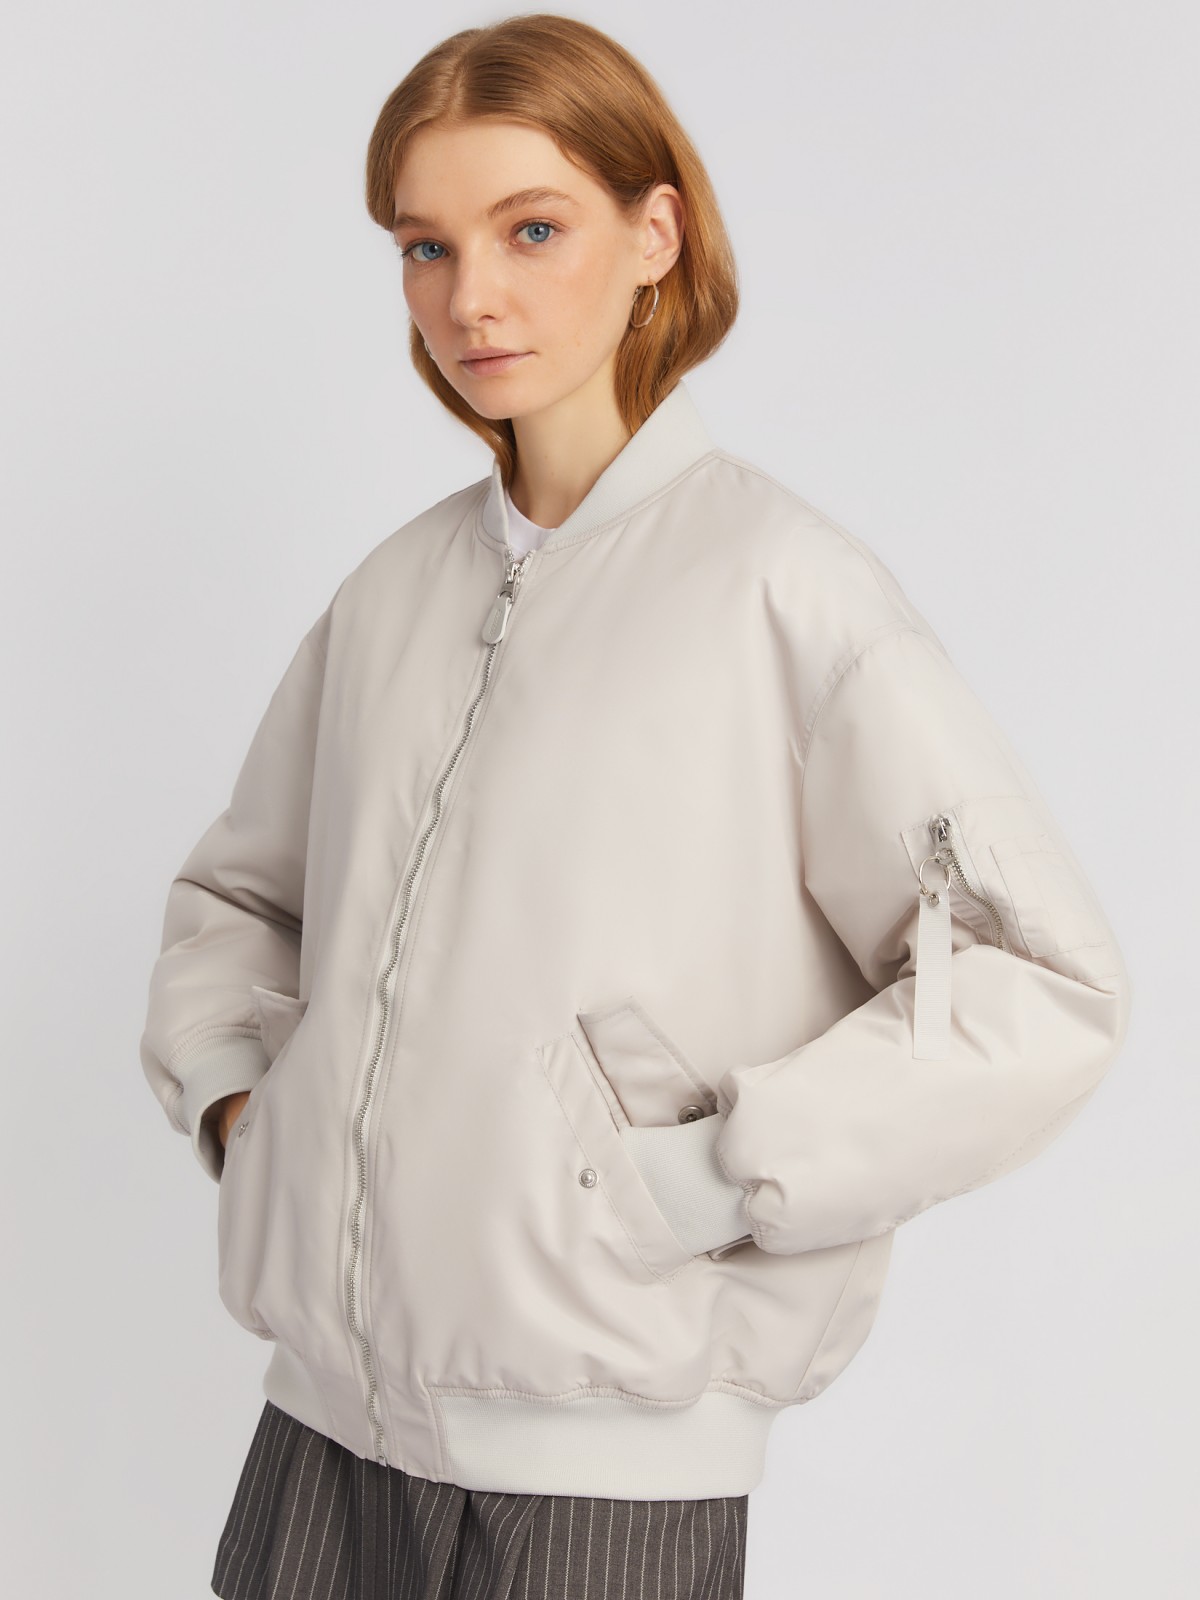 Тёплая куртка-бомбер на синтепоне zolla 024125150234, цвет светло-серый, размер XS - фото 4